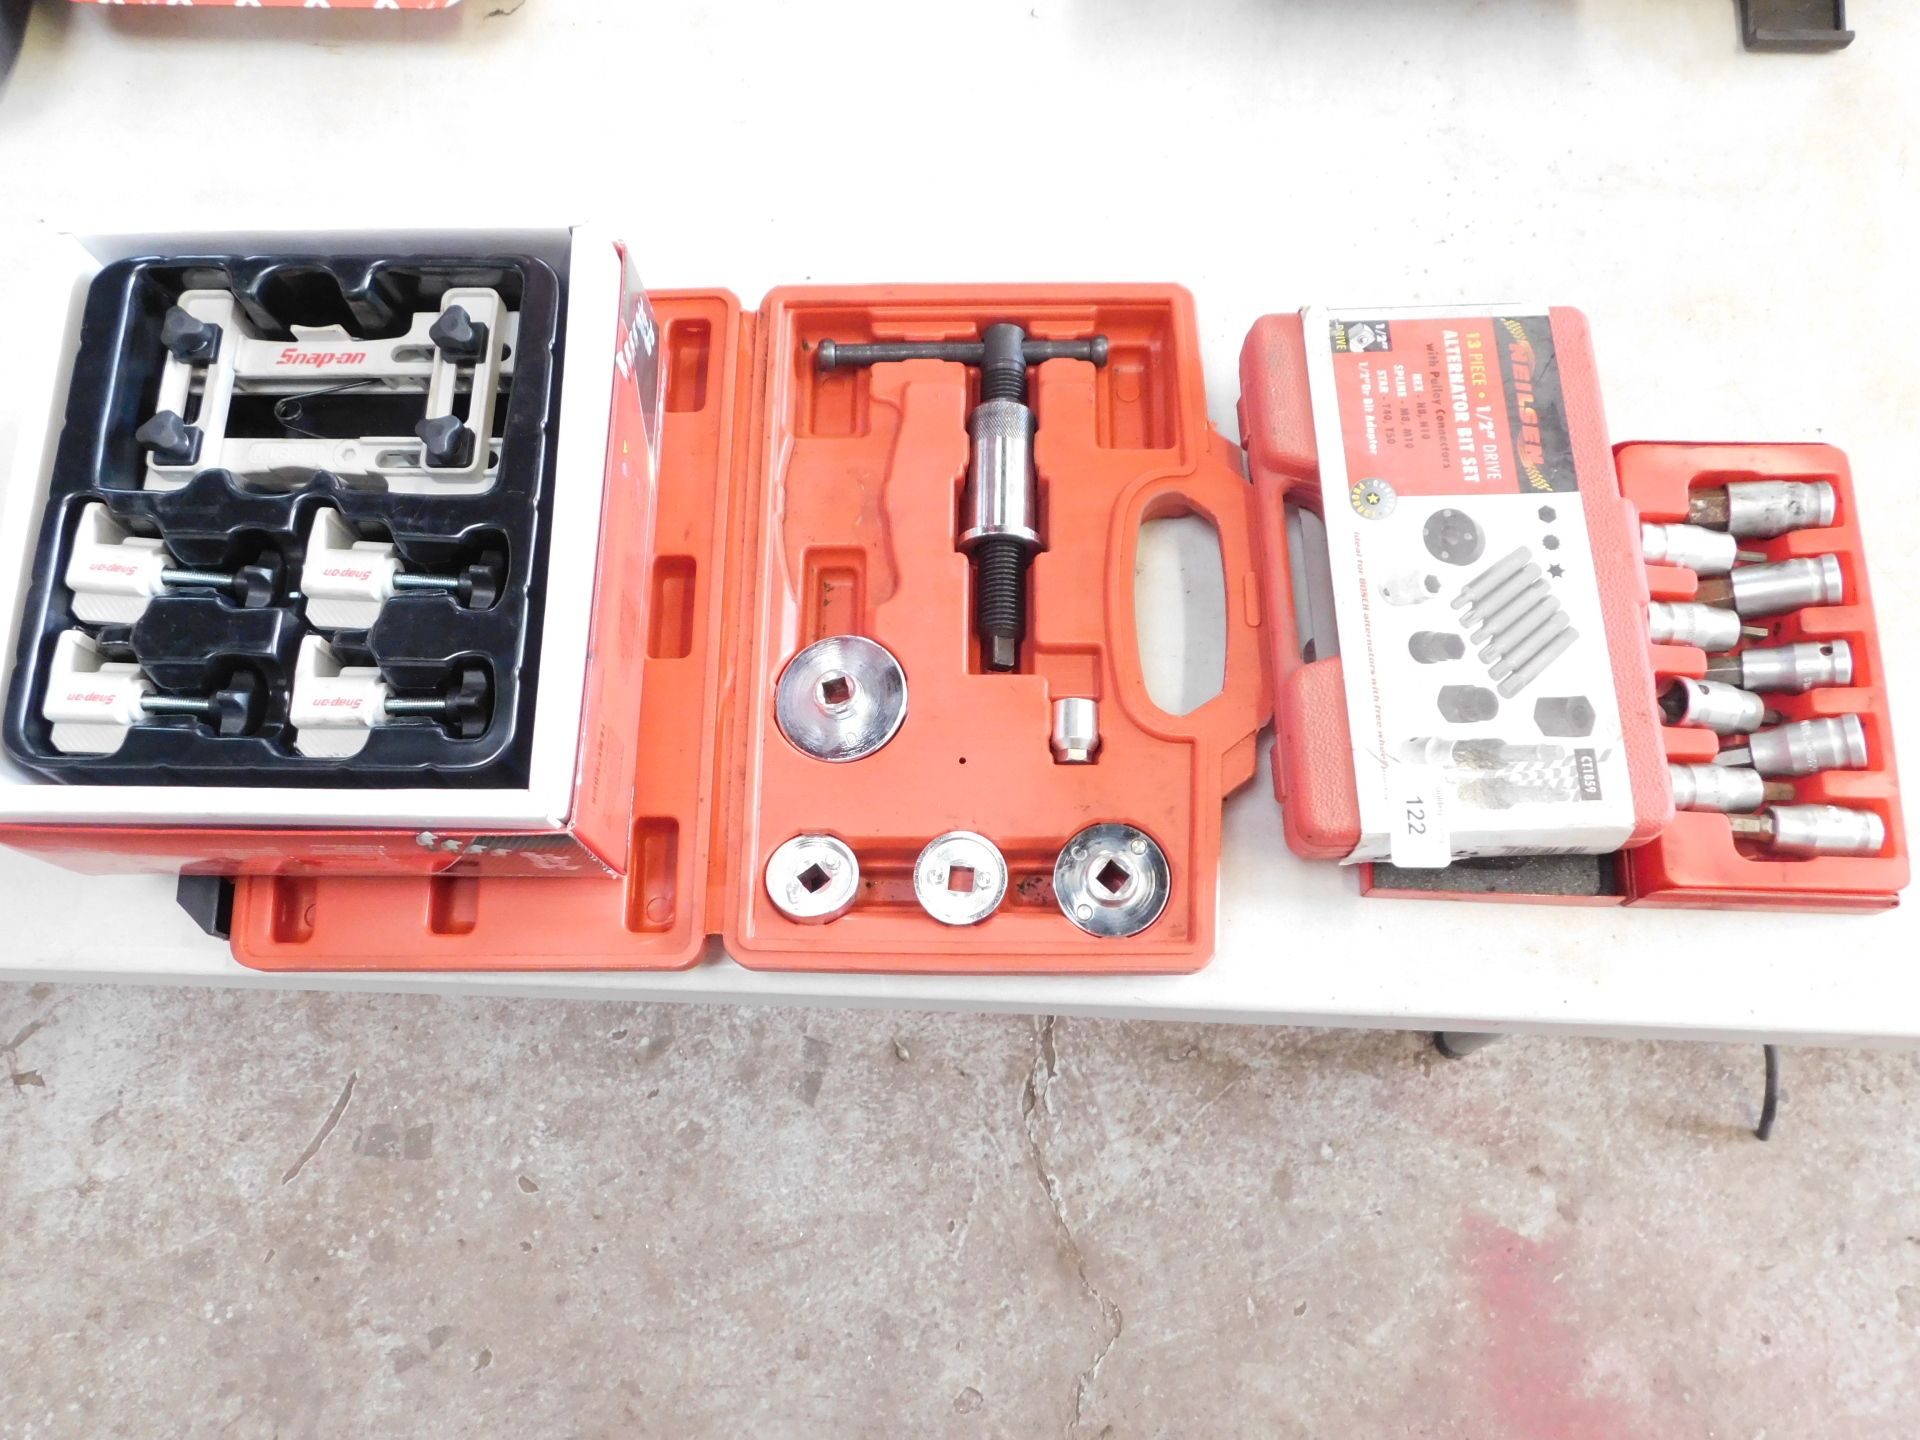 A Snap On gear lock master kit, a Neilsen break caliper piston tool, a Neilsen alternator bit set, a